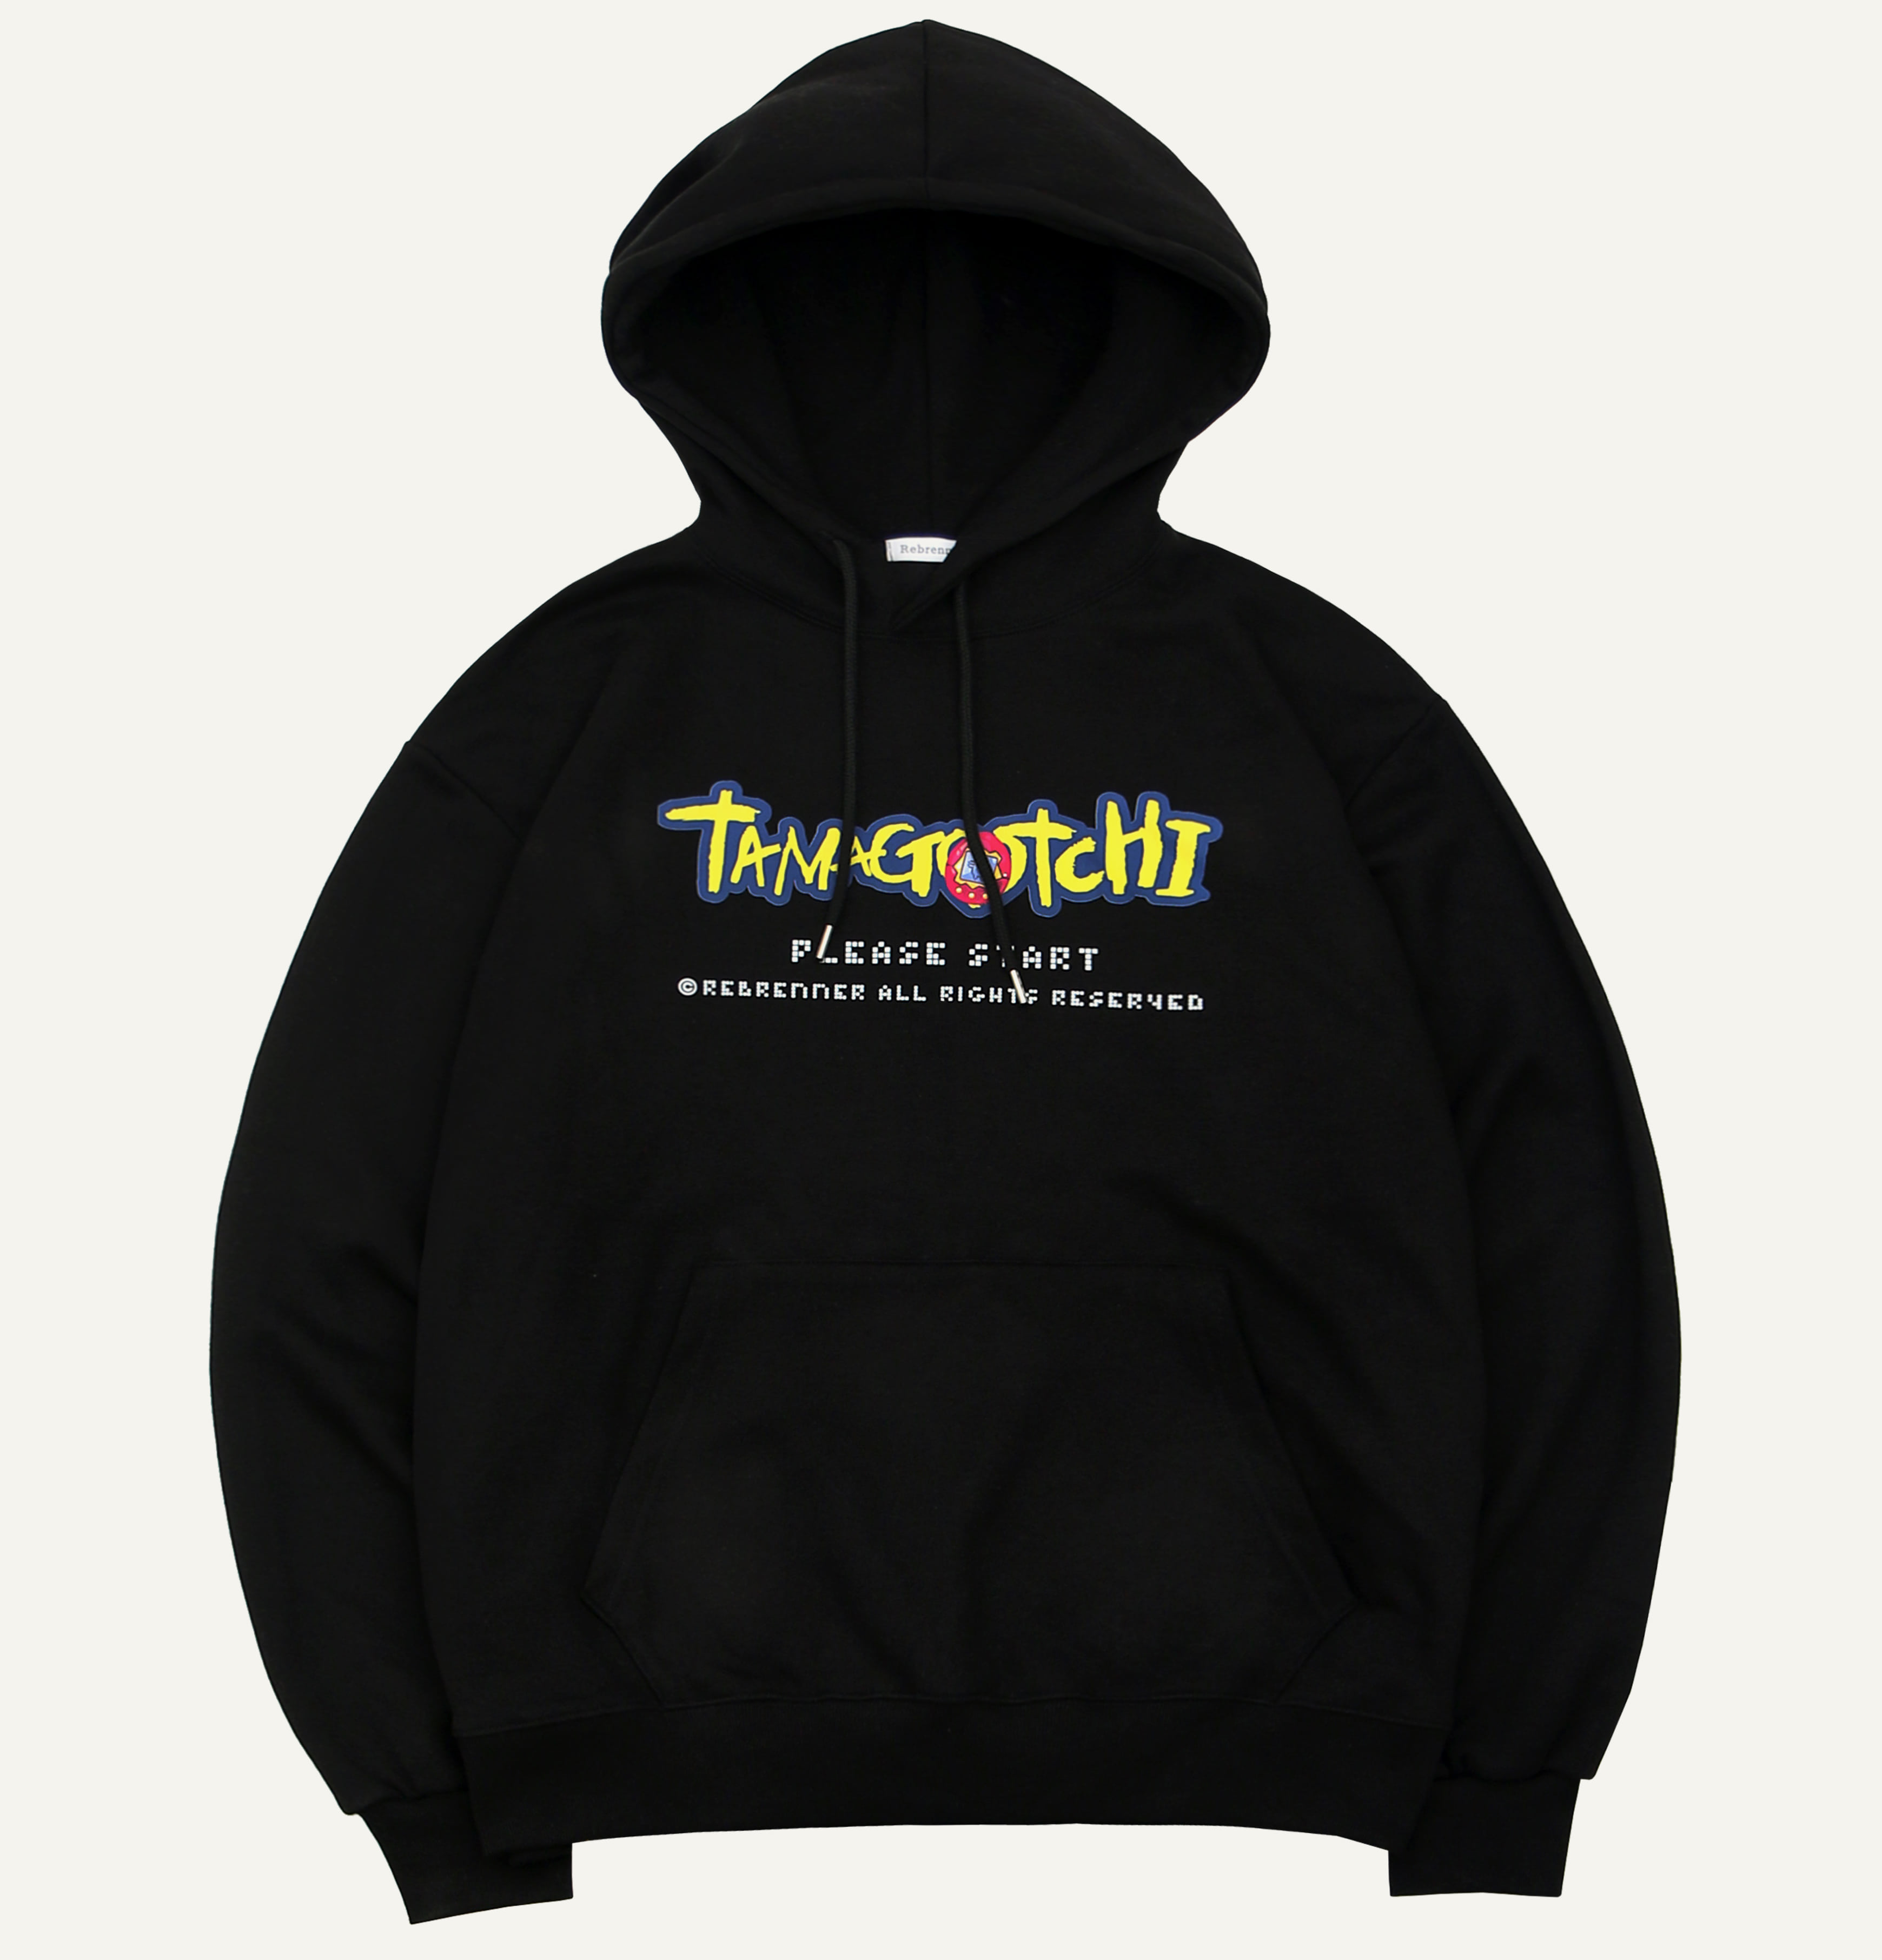 Tamagotchi hoodie black